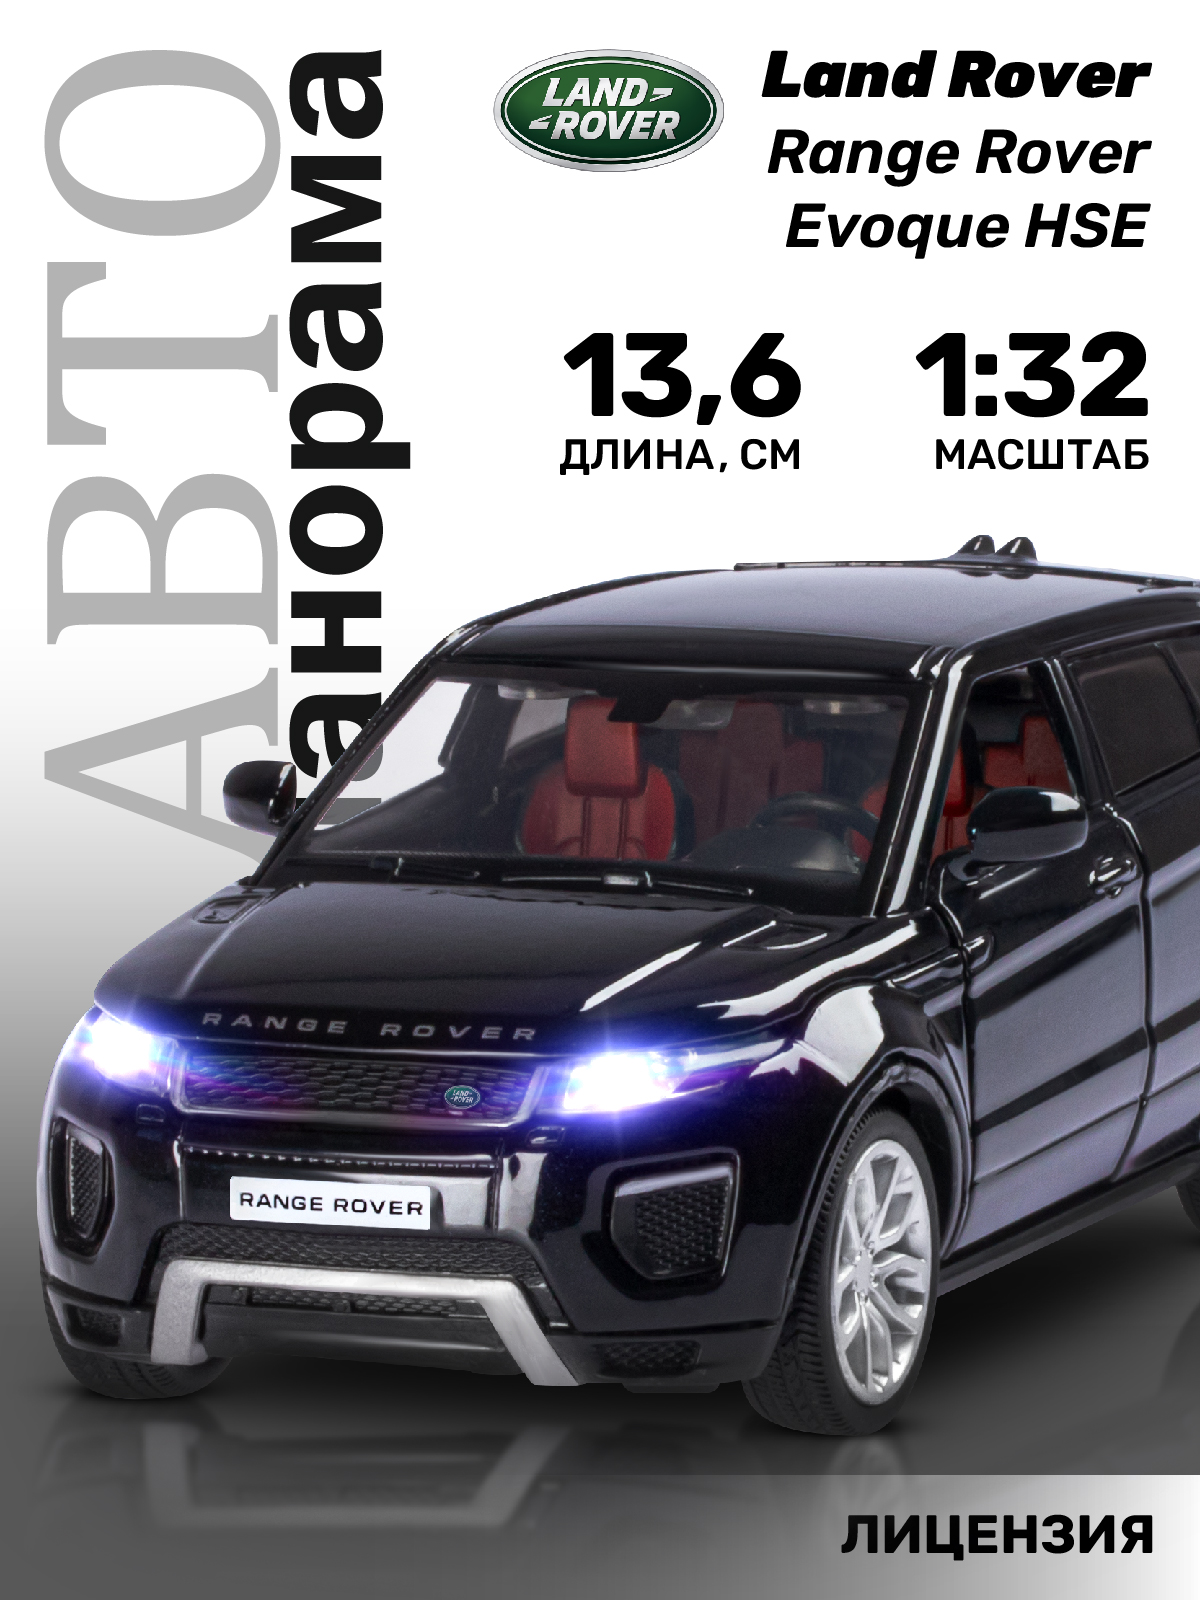 Машинка металлическая Автопанорама Range Rover Evoque, М1:32, инерционная, JB1251548 машинка металлическая автопанорама range rover evoque м1 32 инерционная jb1251548